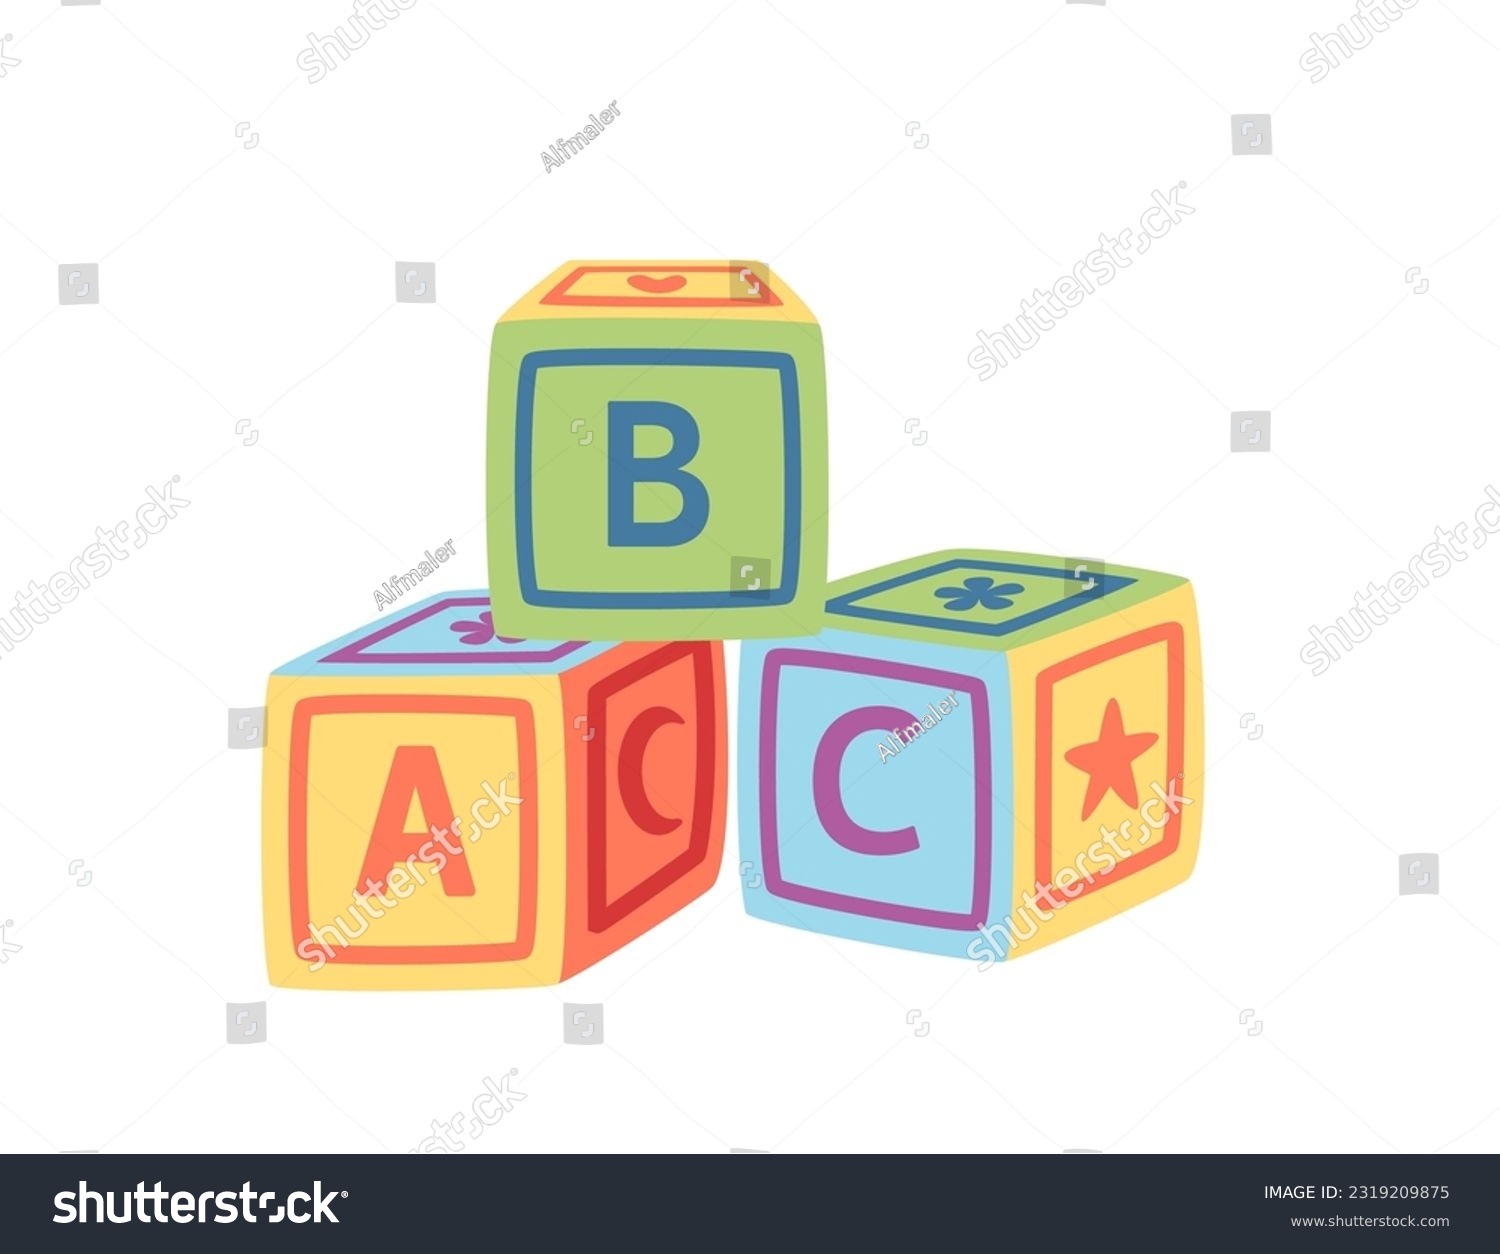 Baby abc blocks toy plastic cubes vector illustration isolated on white background #2319209875